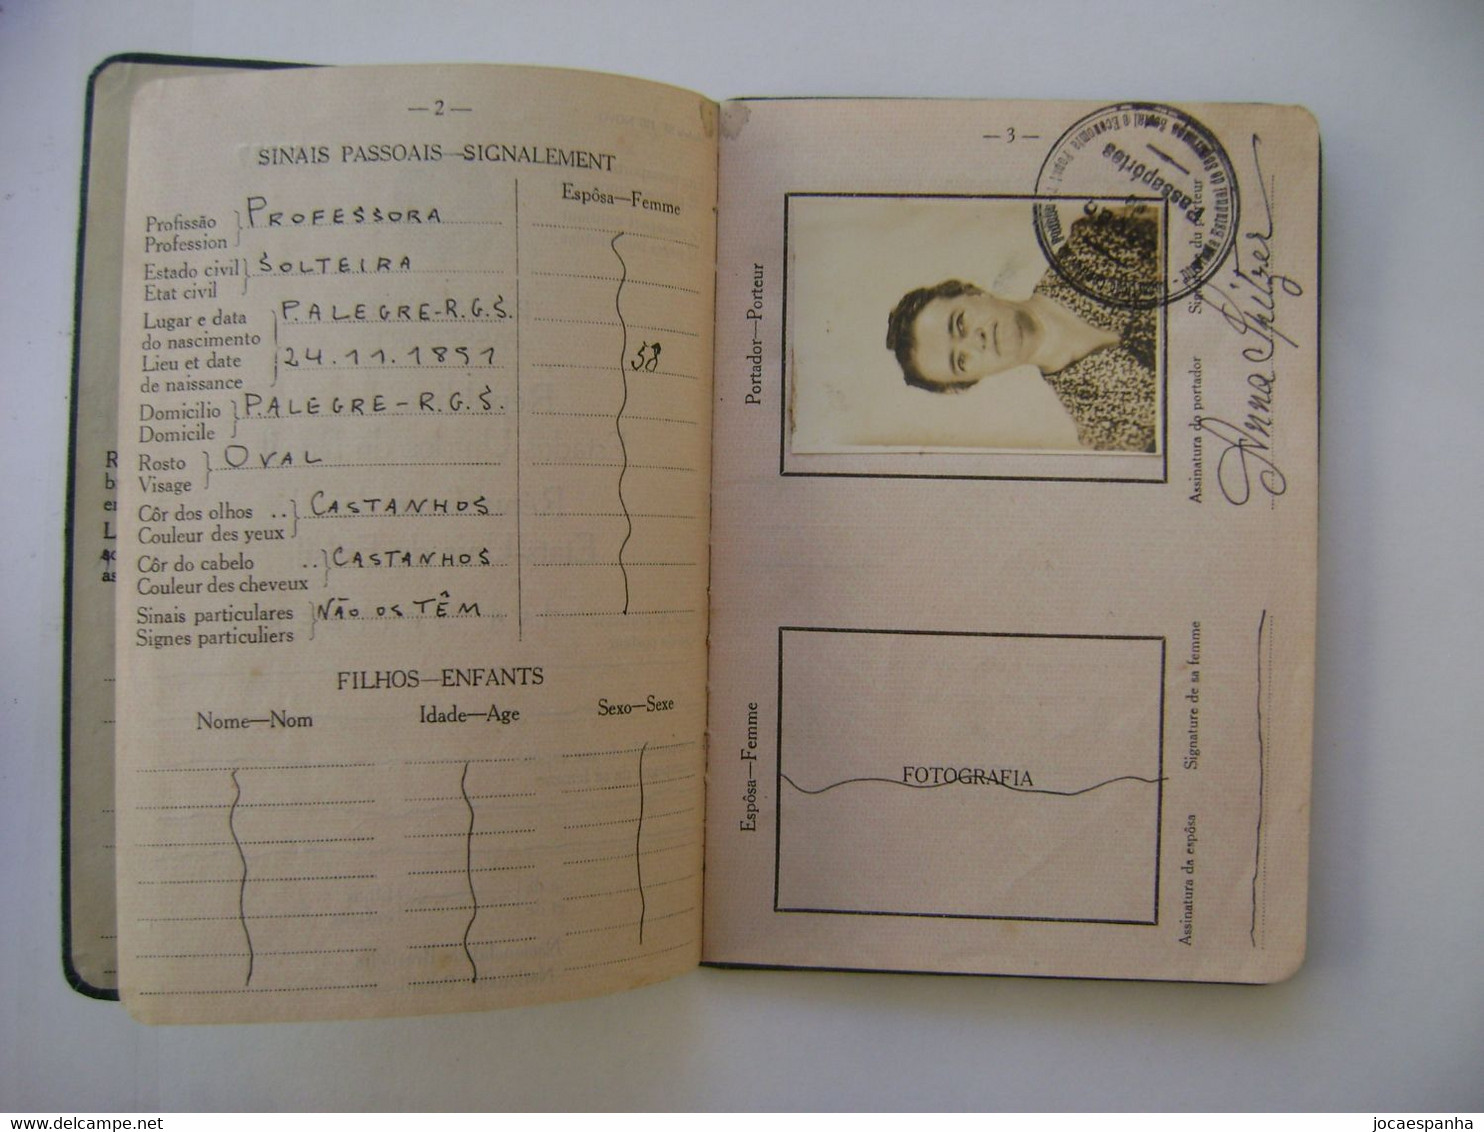 BRAZIL / BRASIL - PASSPORT ISSUED IN 1950 IN THE STATE - Historische Dokumente